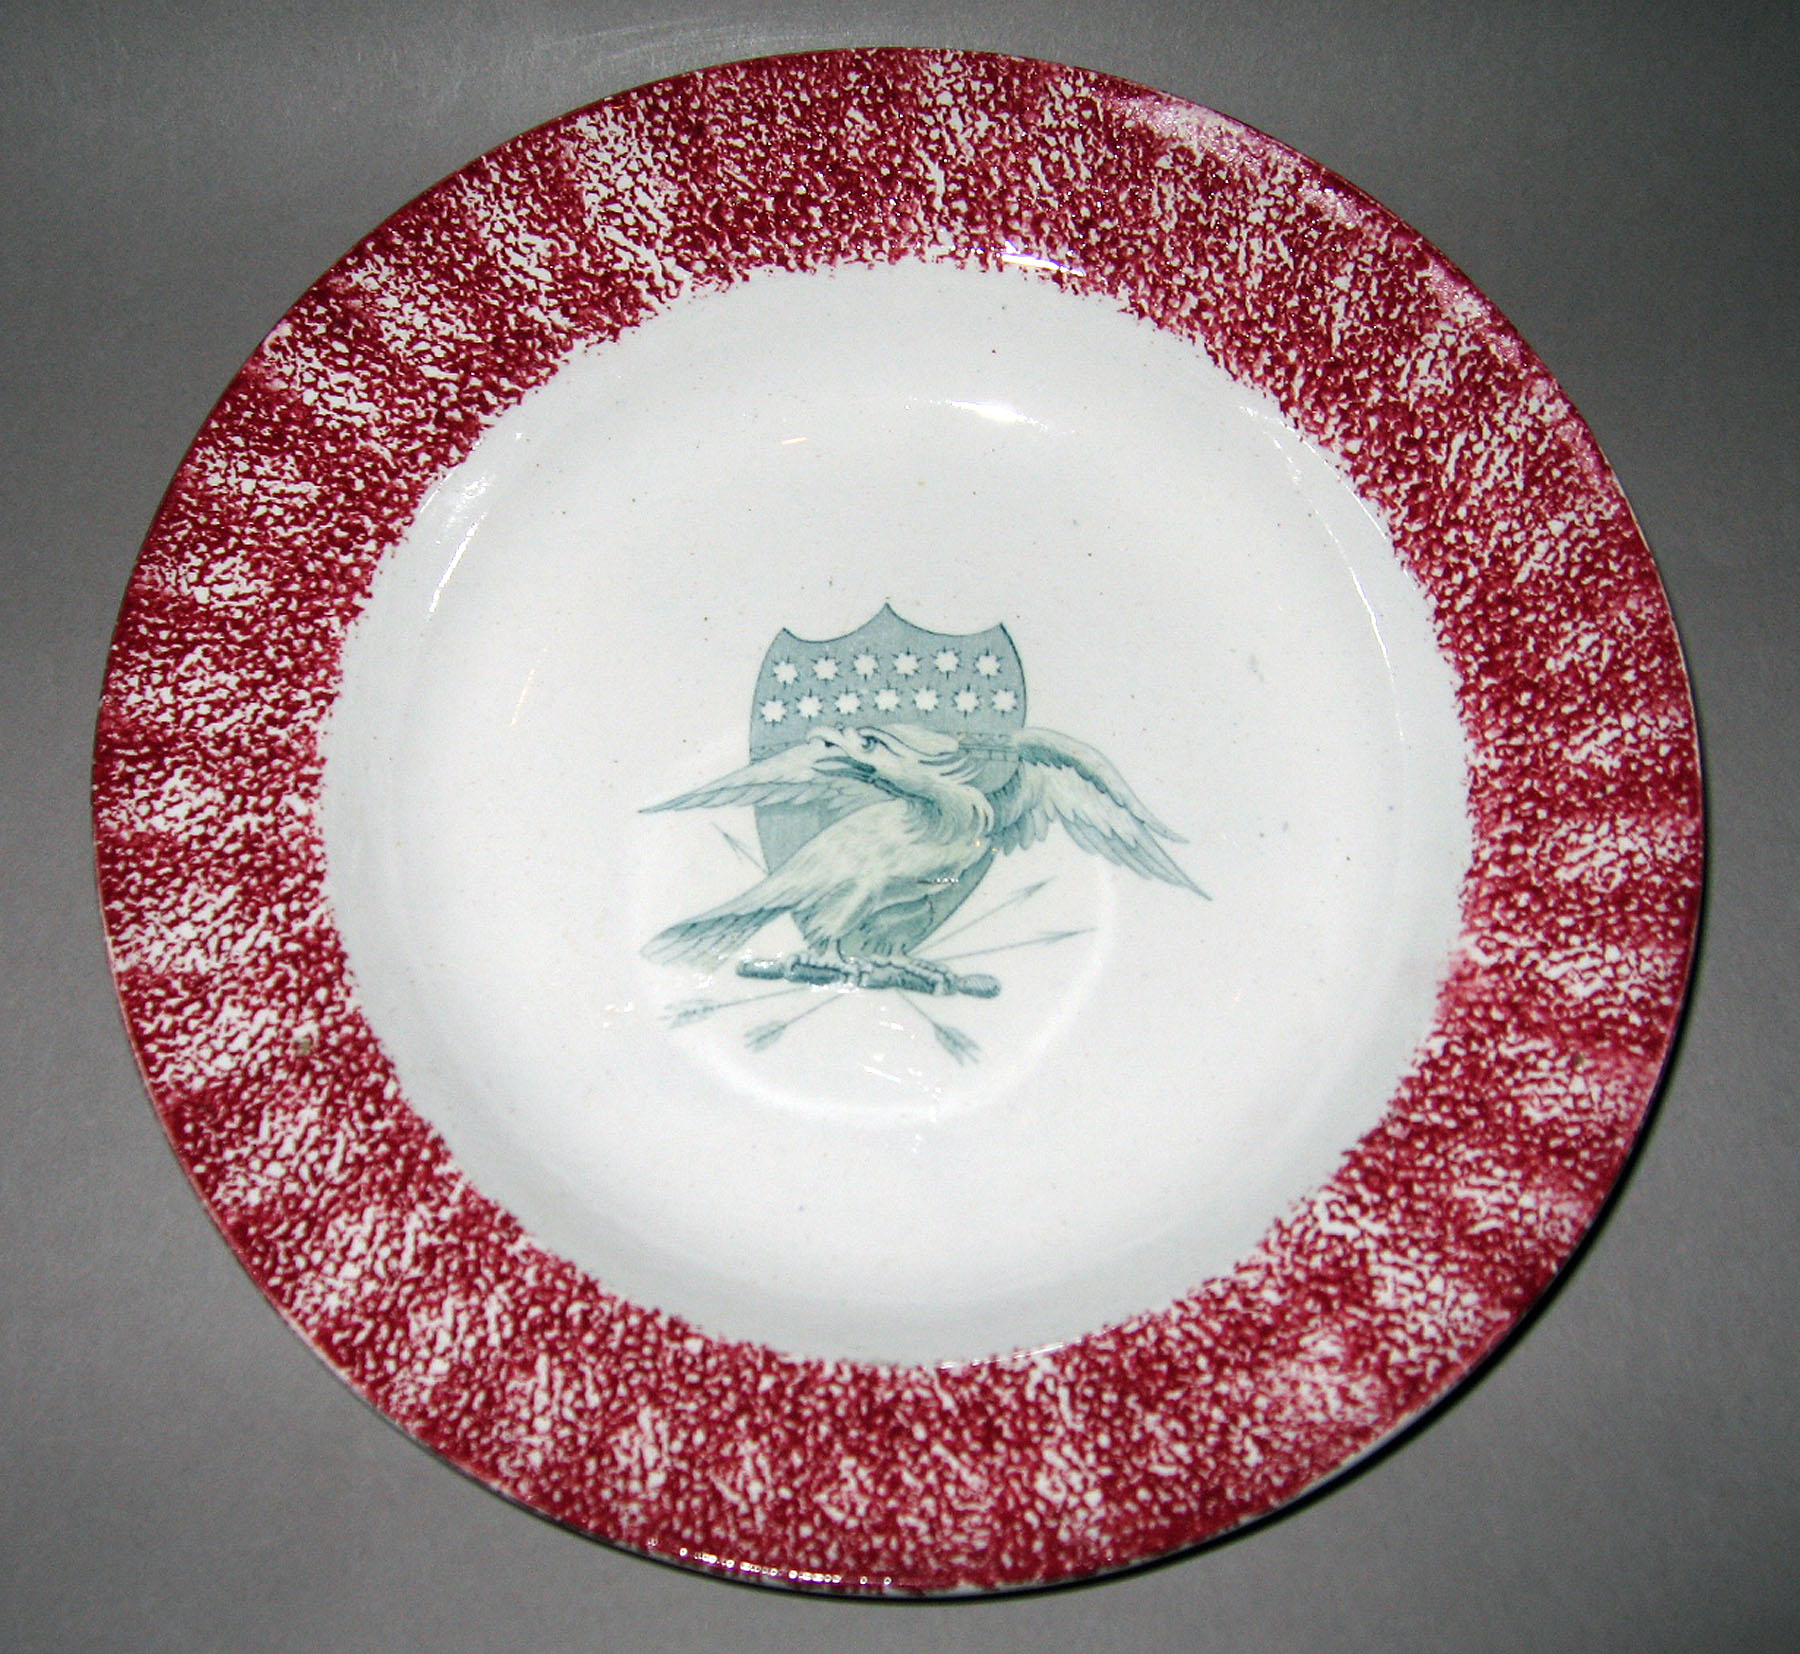 1965.0870.002 Spatterware soup plate